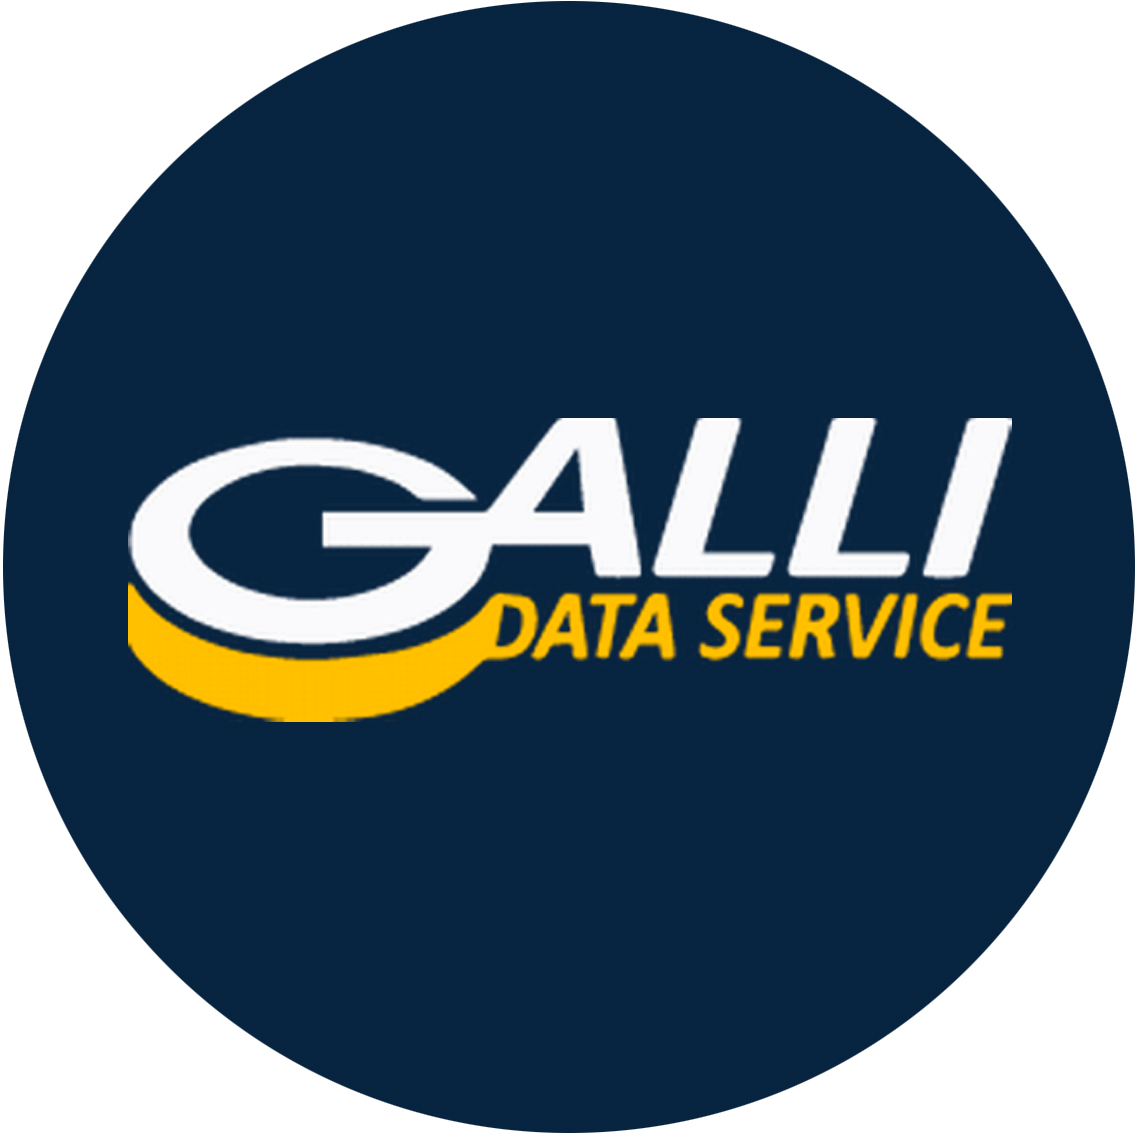 Galli Data Service